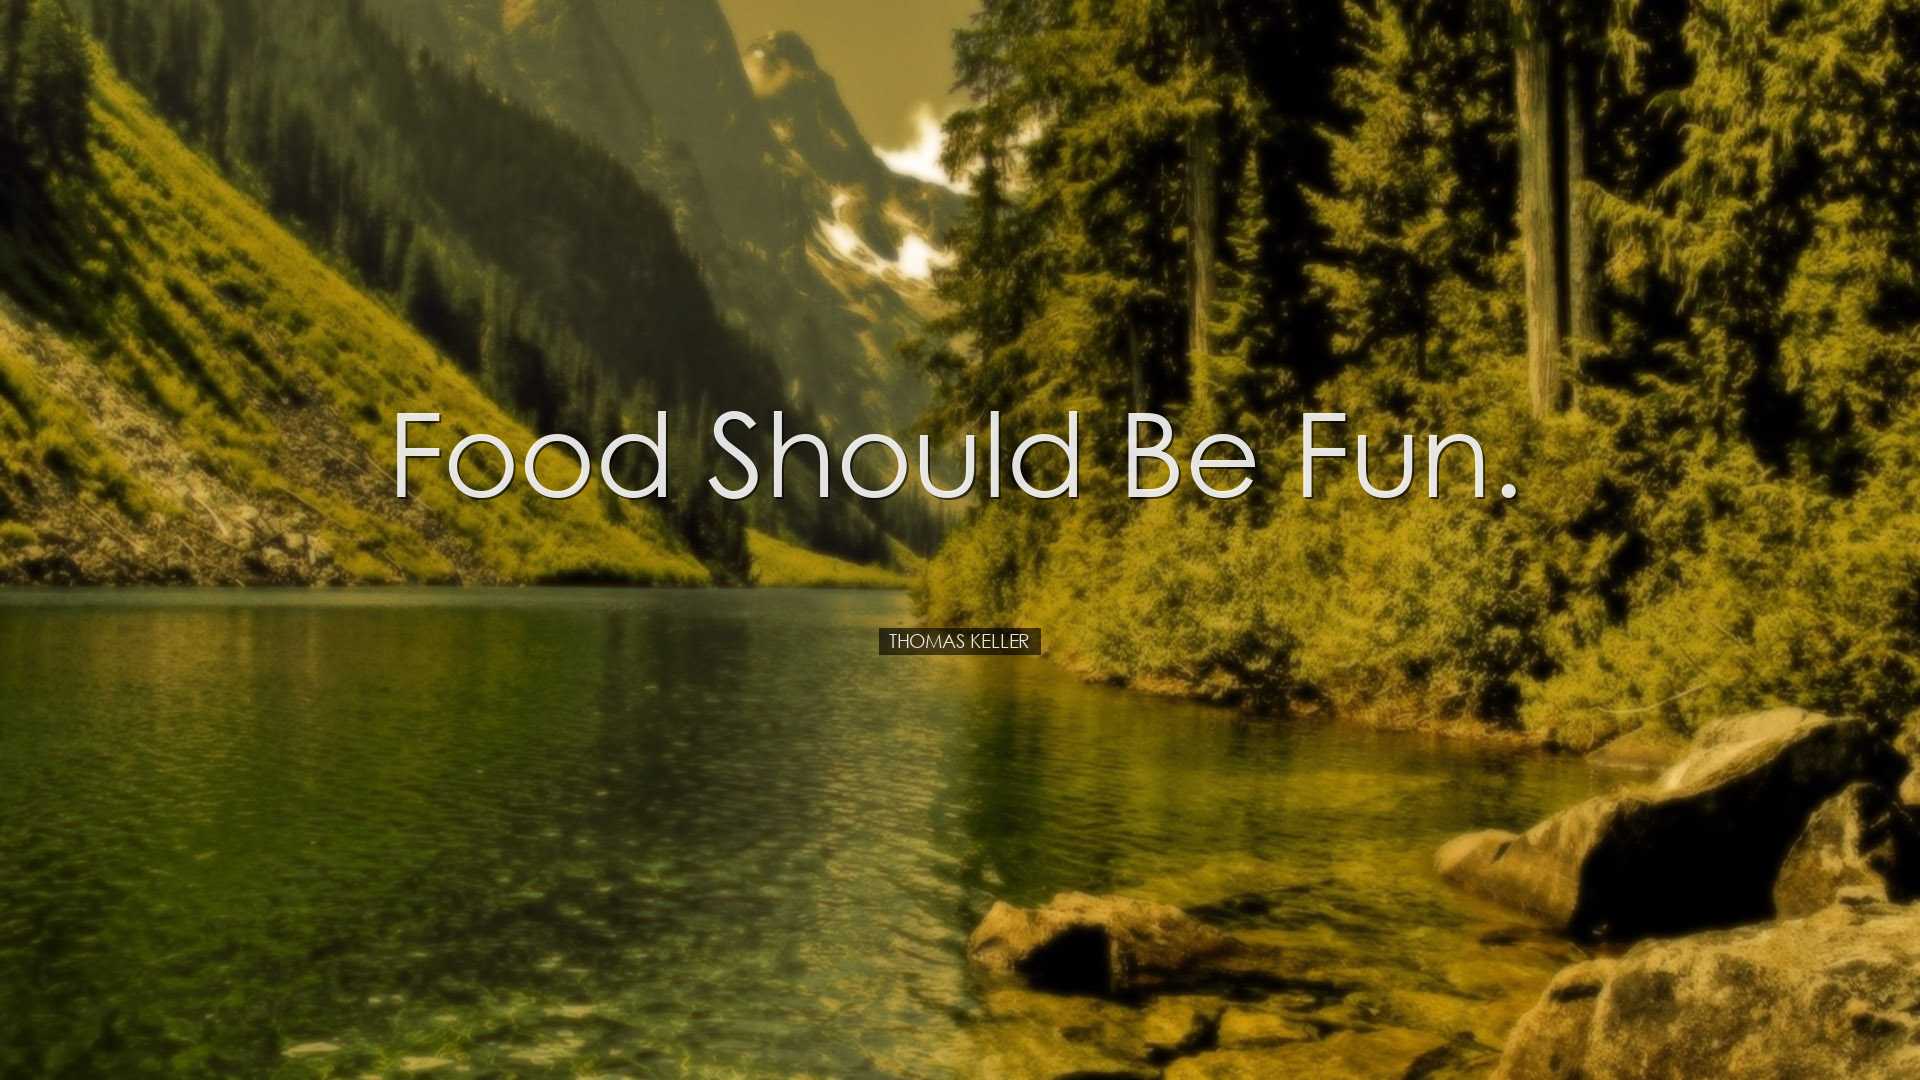 Food should be fun. - Thomas Keller